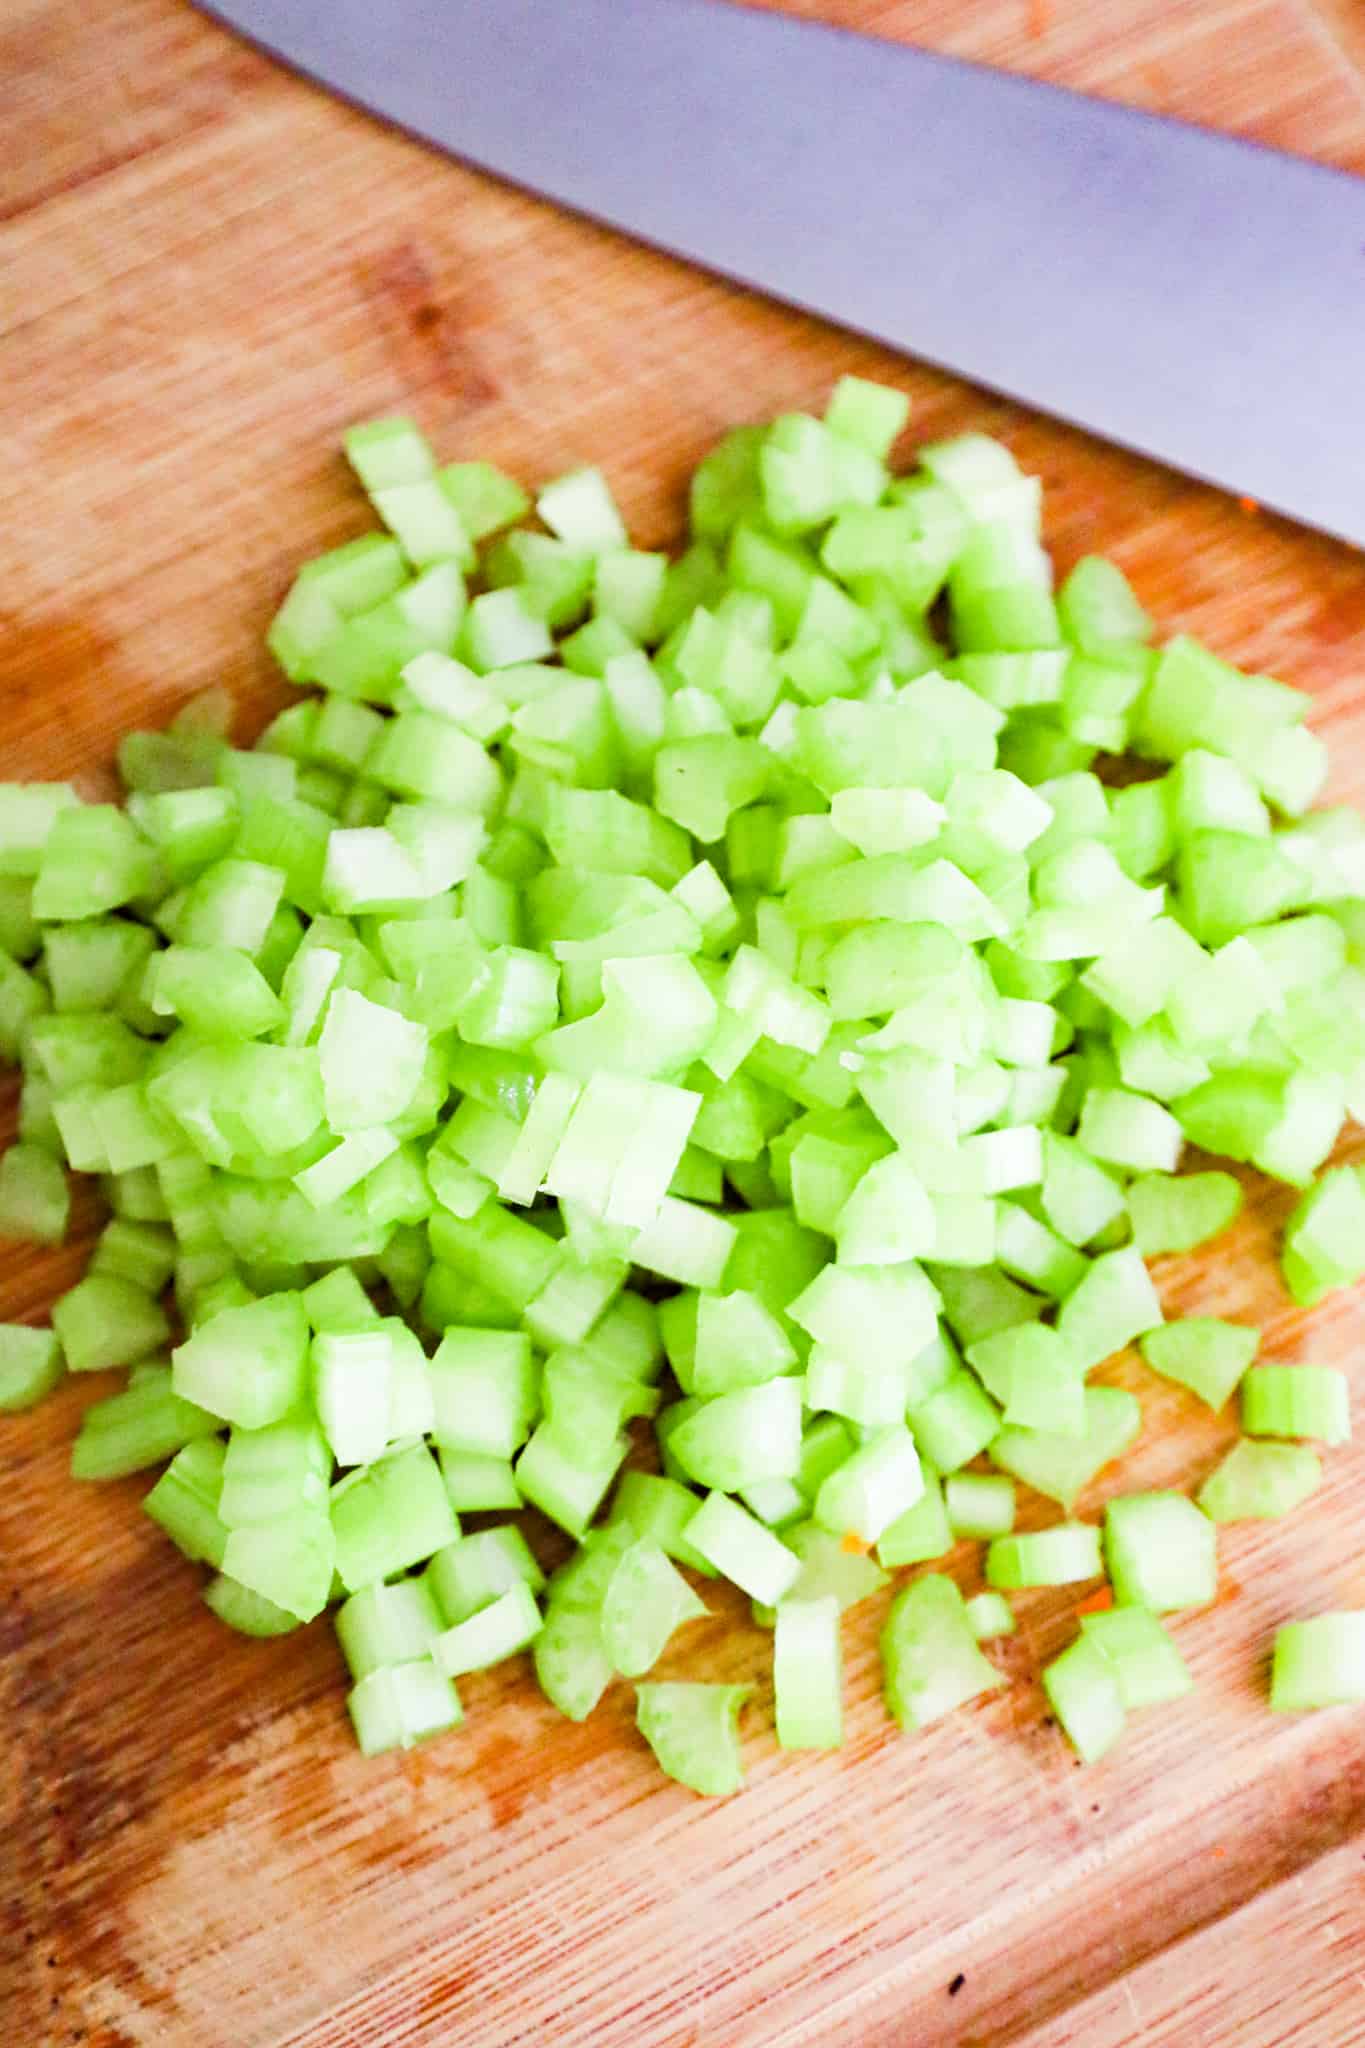 diced celery on a cutting board